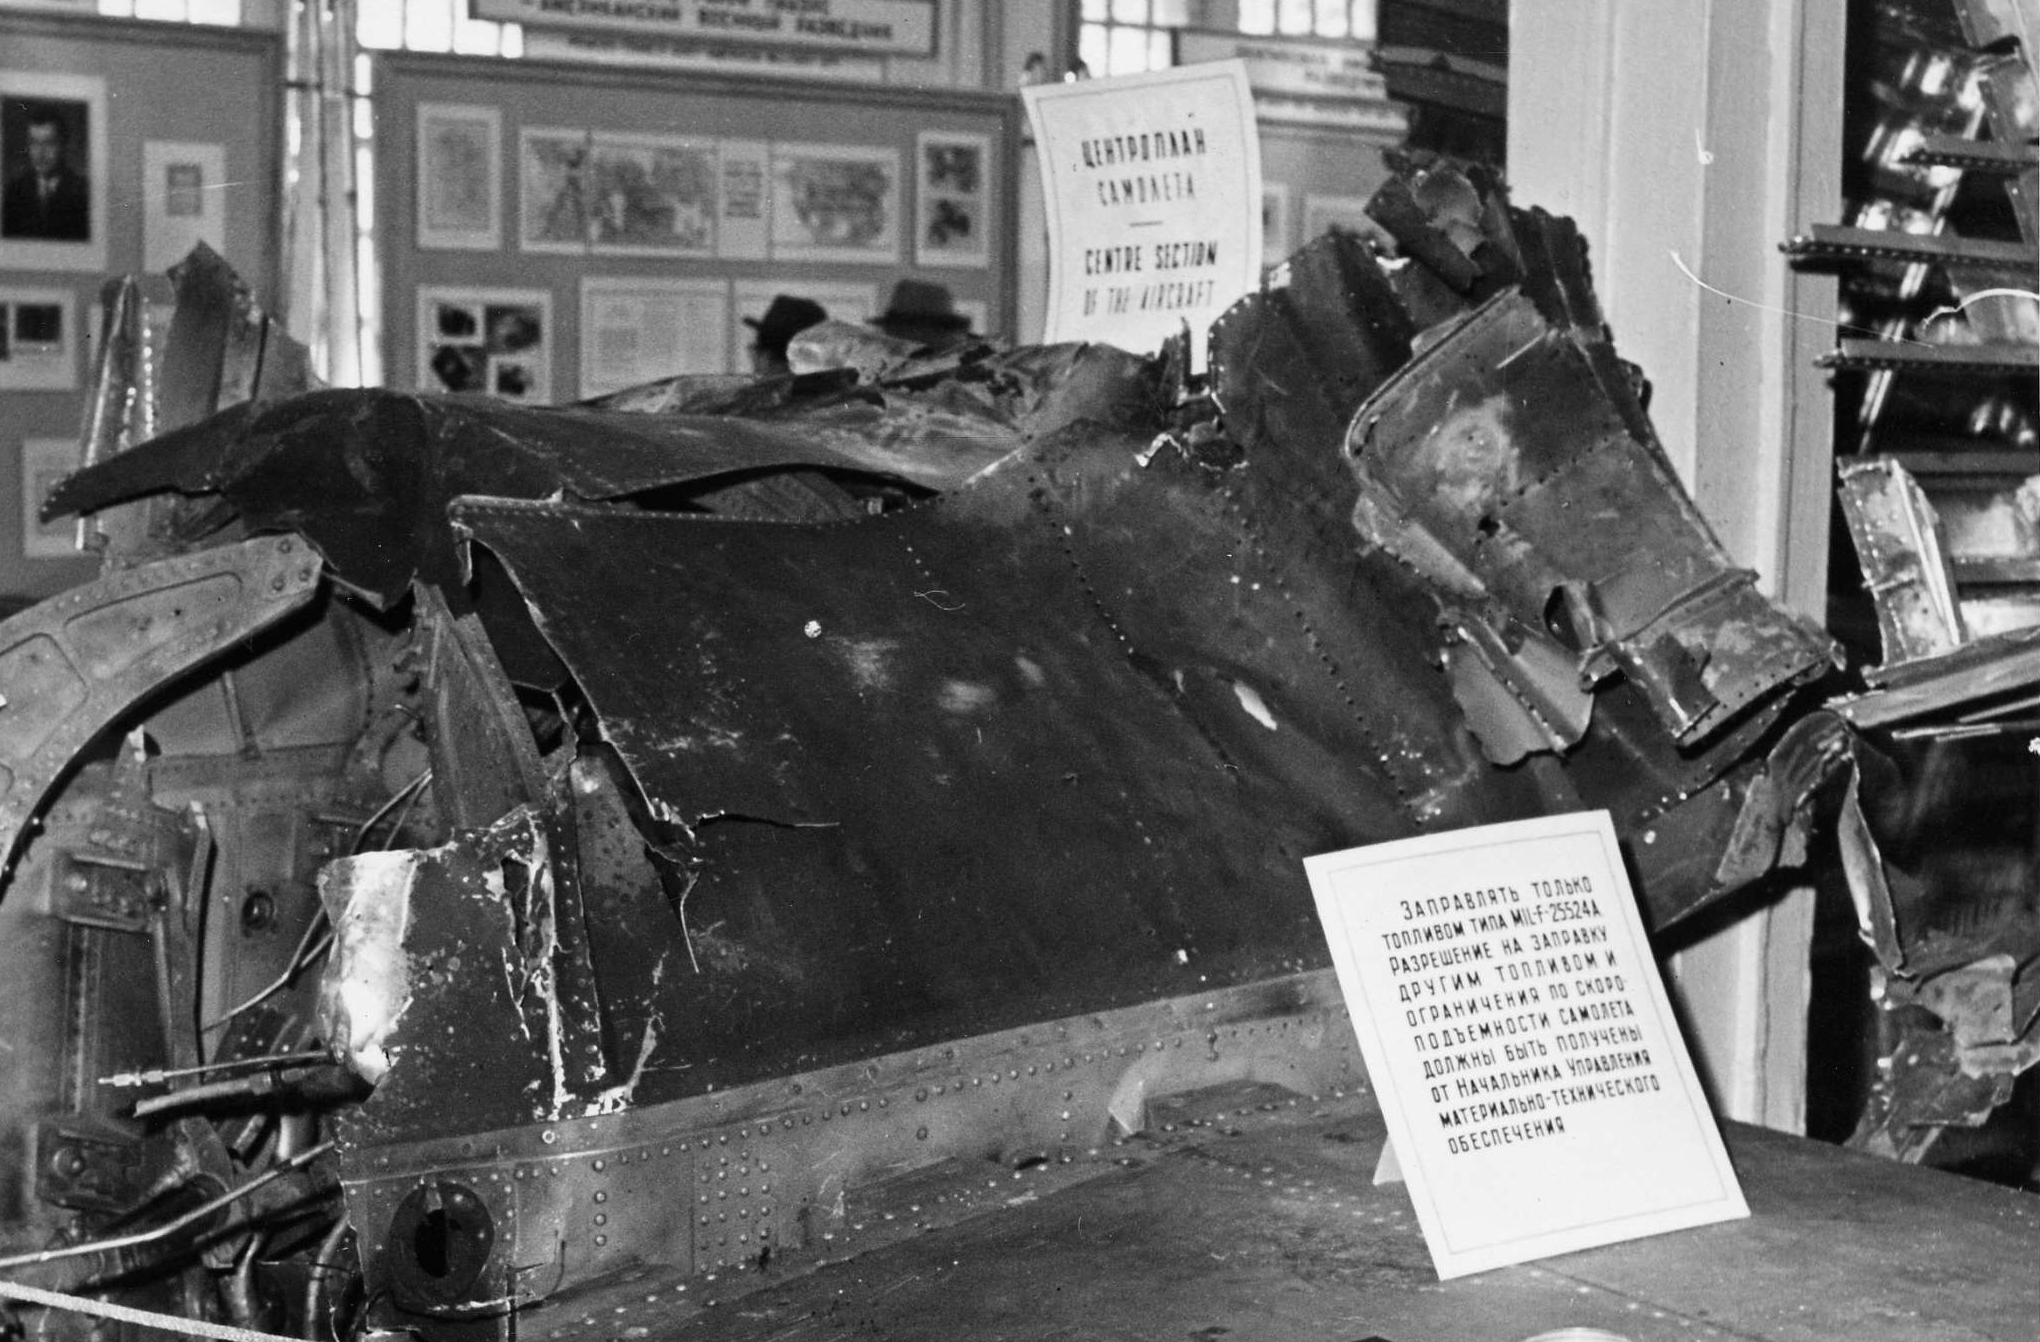 Wreckage from American U2 Plane